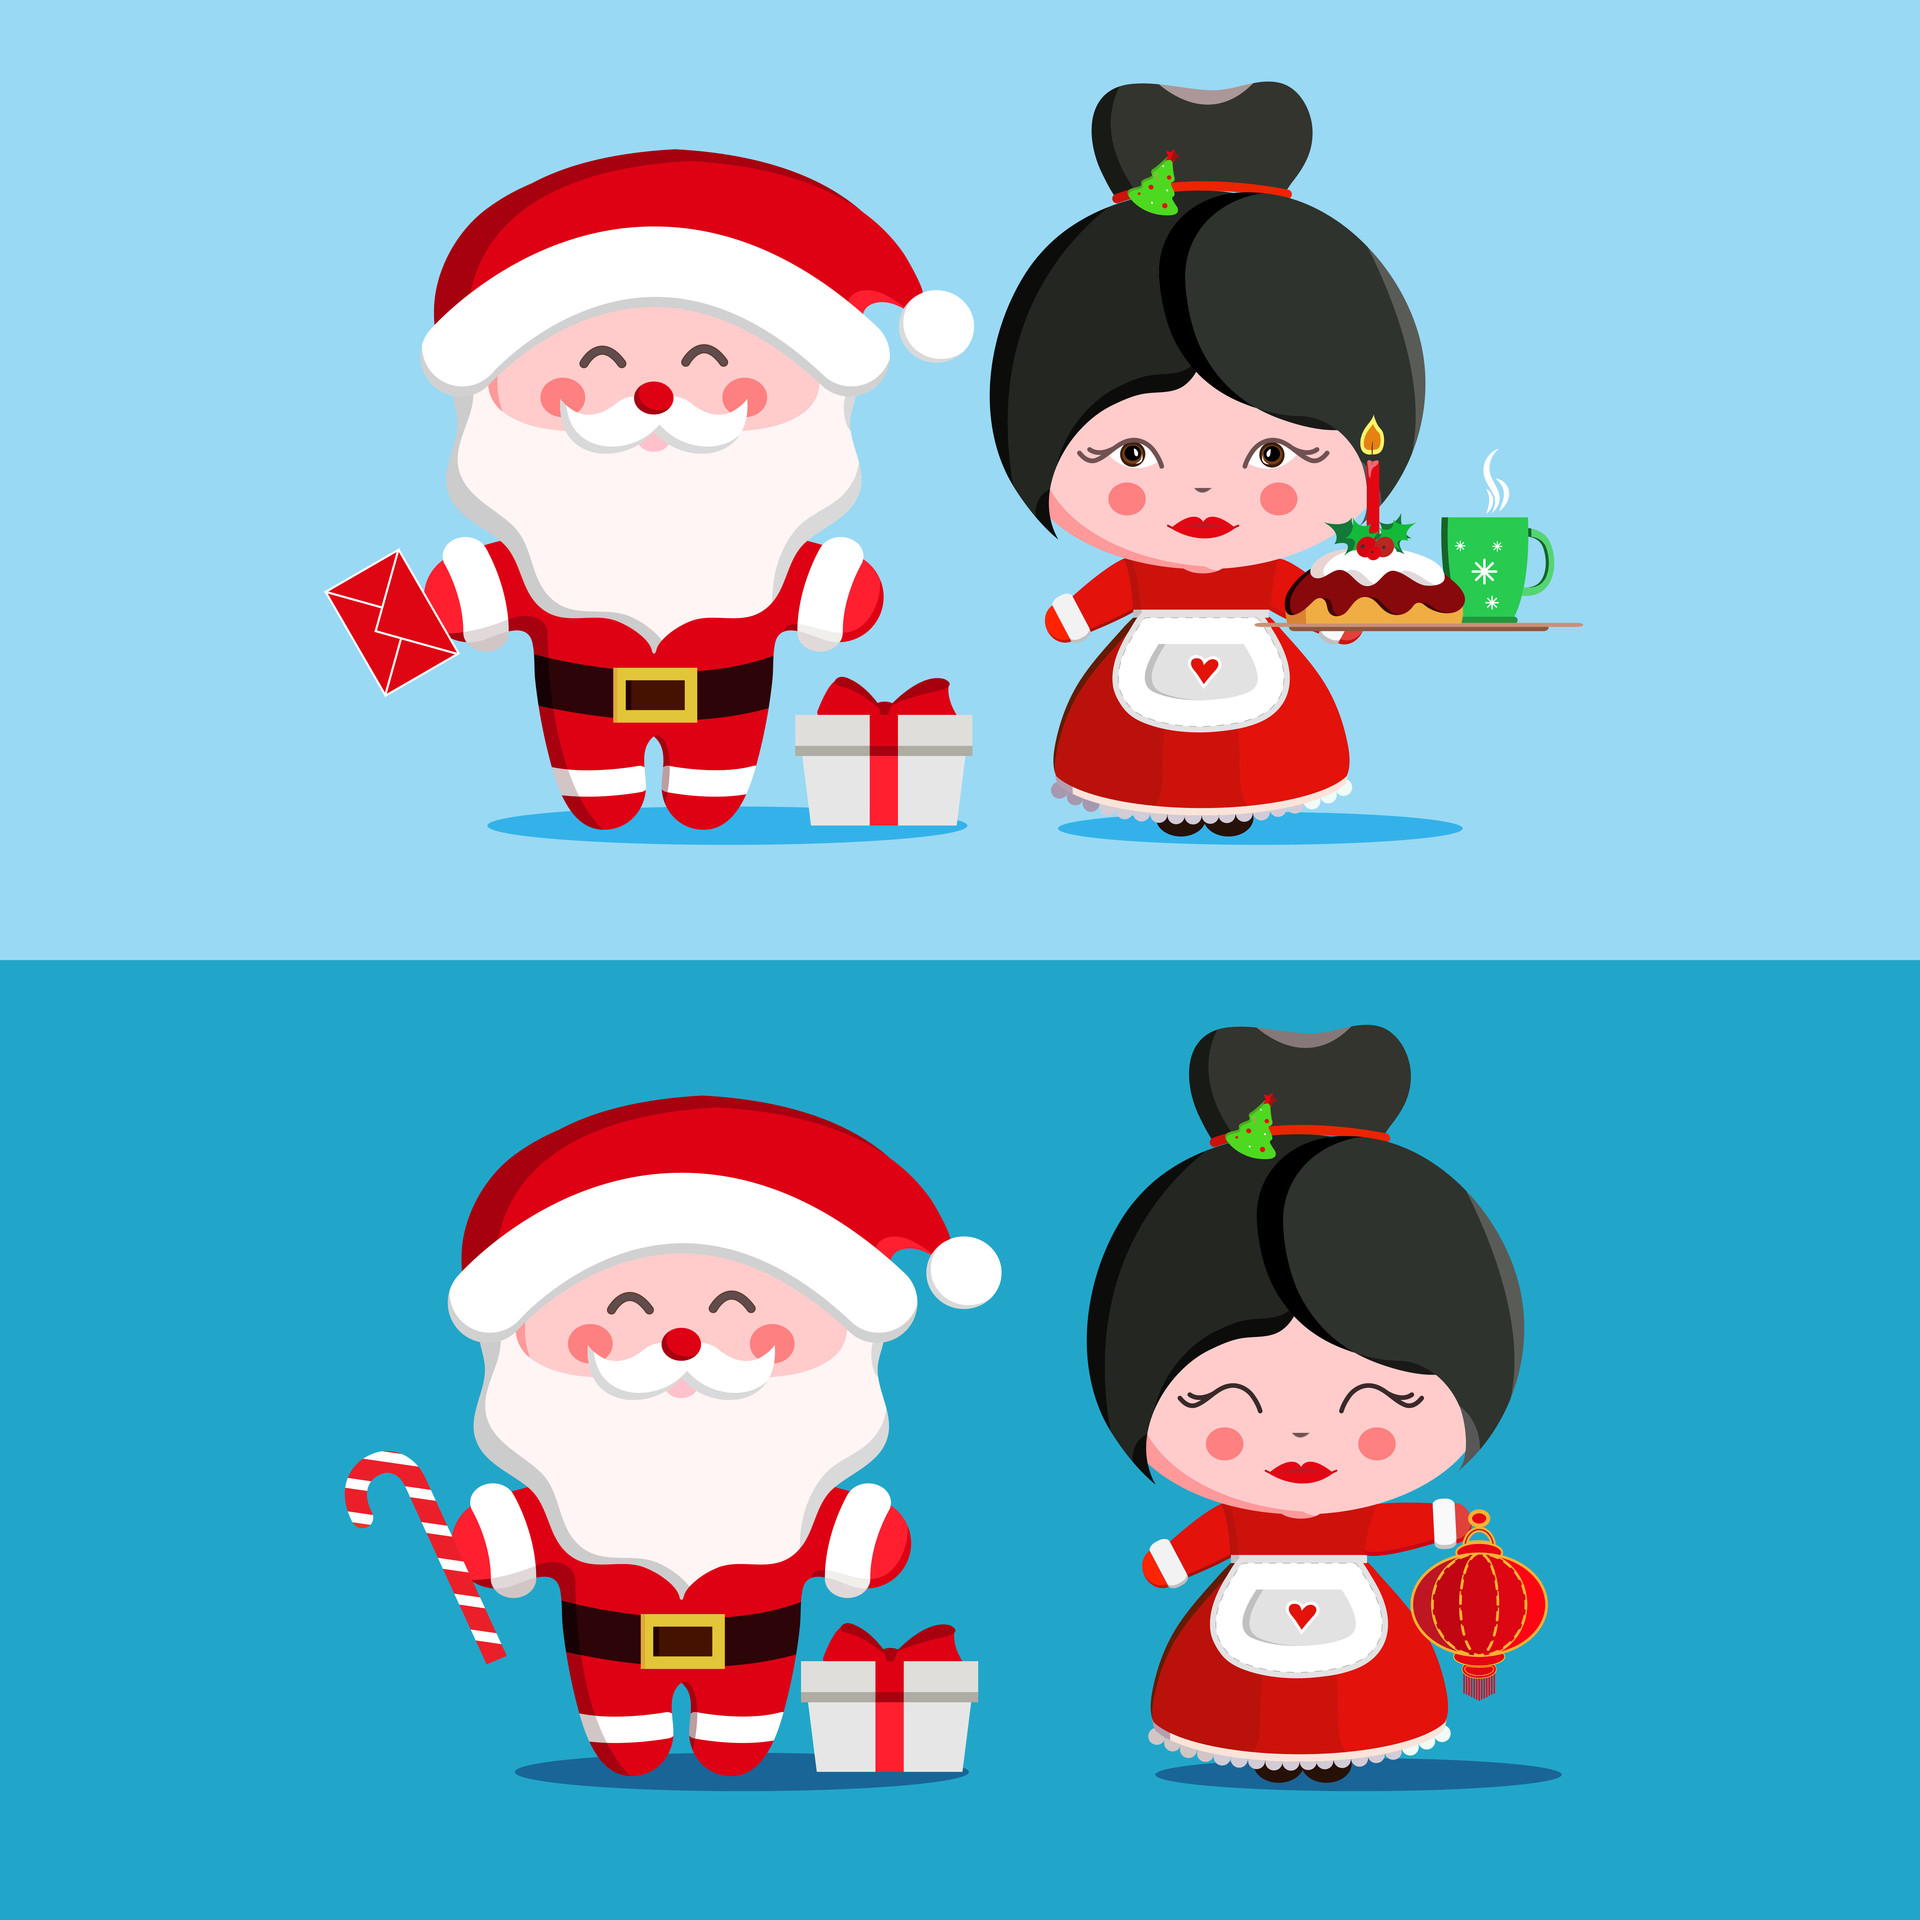 ArtStation - Christmas cartoon characters